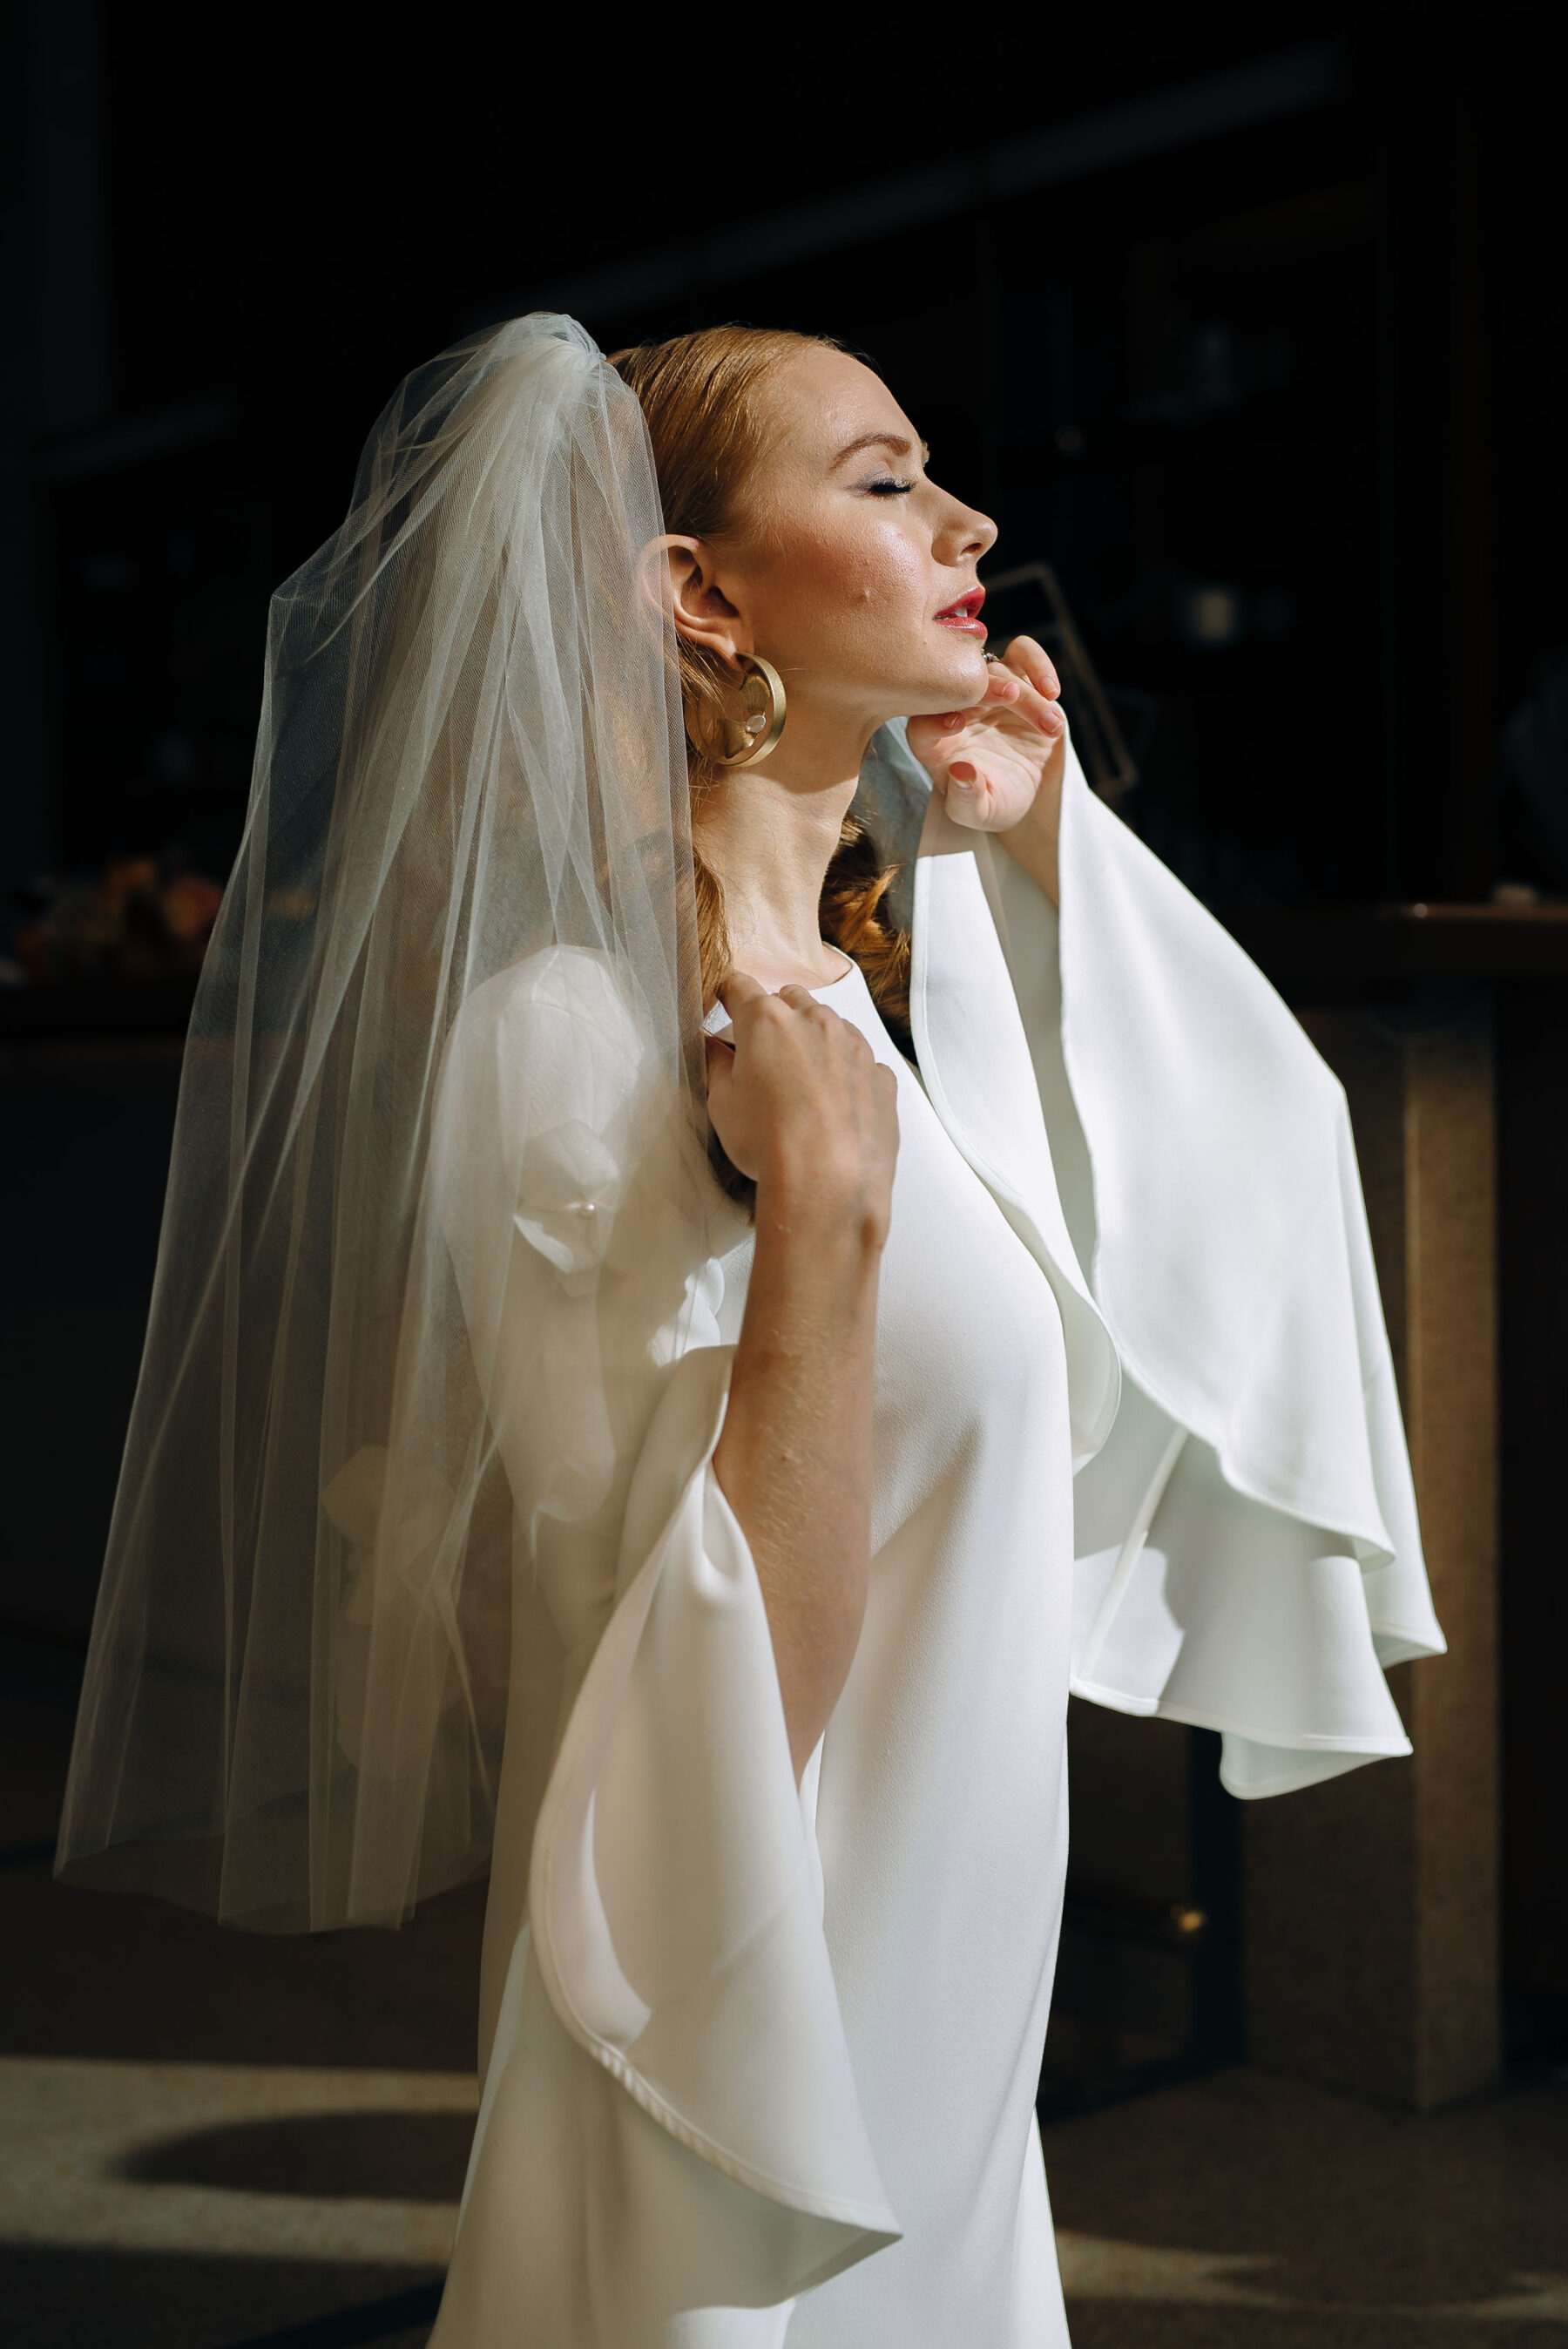 Short wedding dress with bell sleeves | Nashville Bride Guide